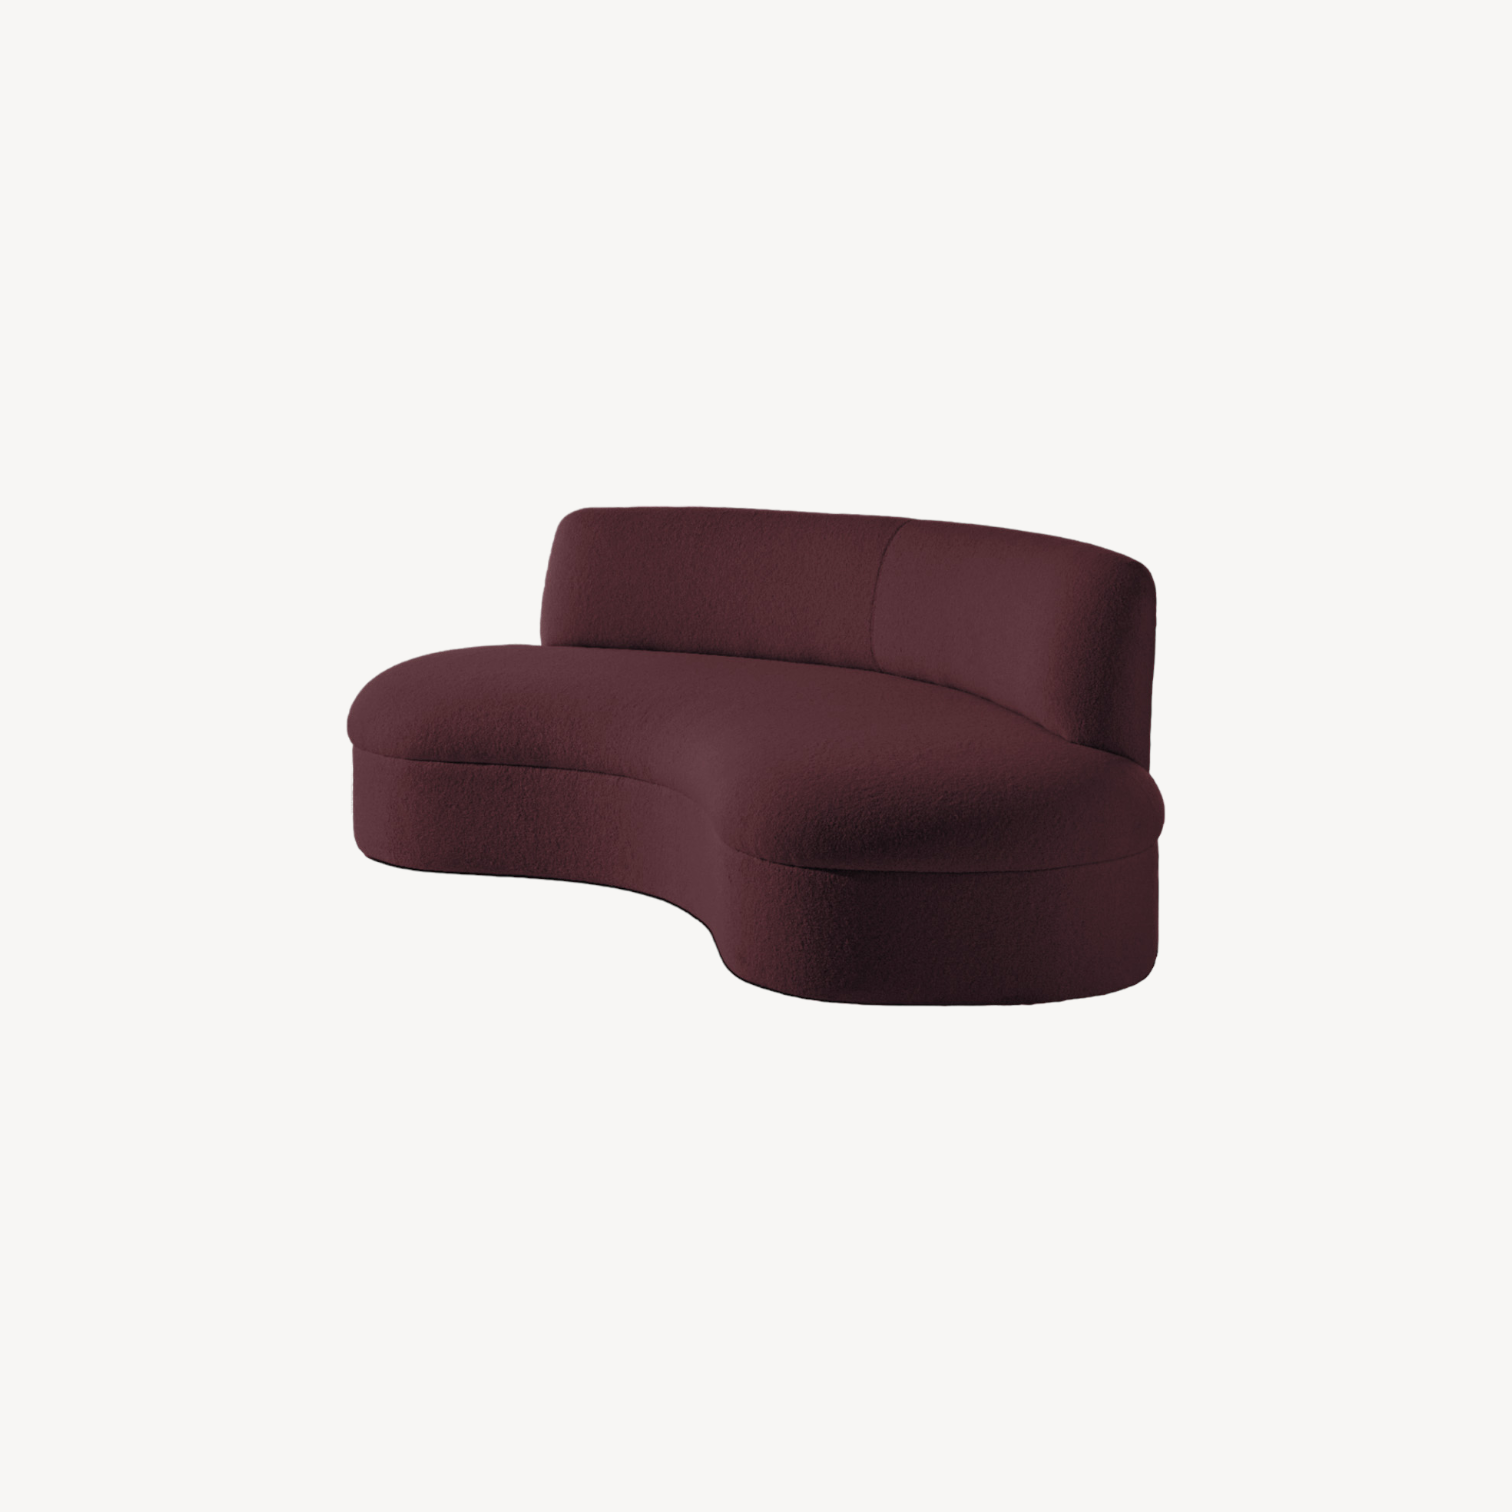 Cloud Sofa - Zuster Furniture